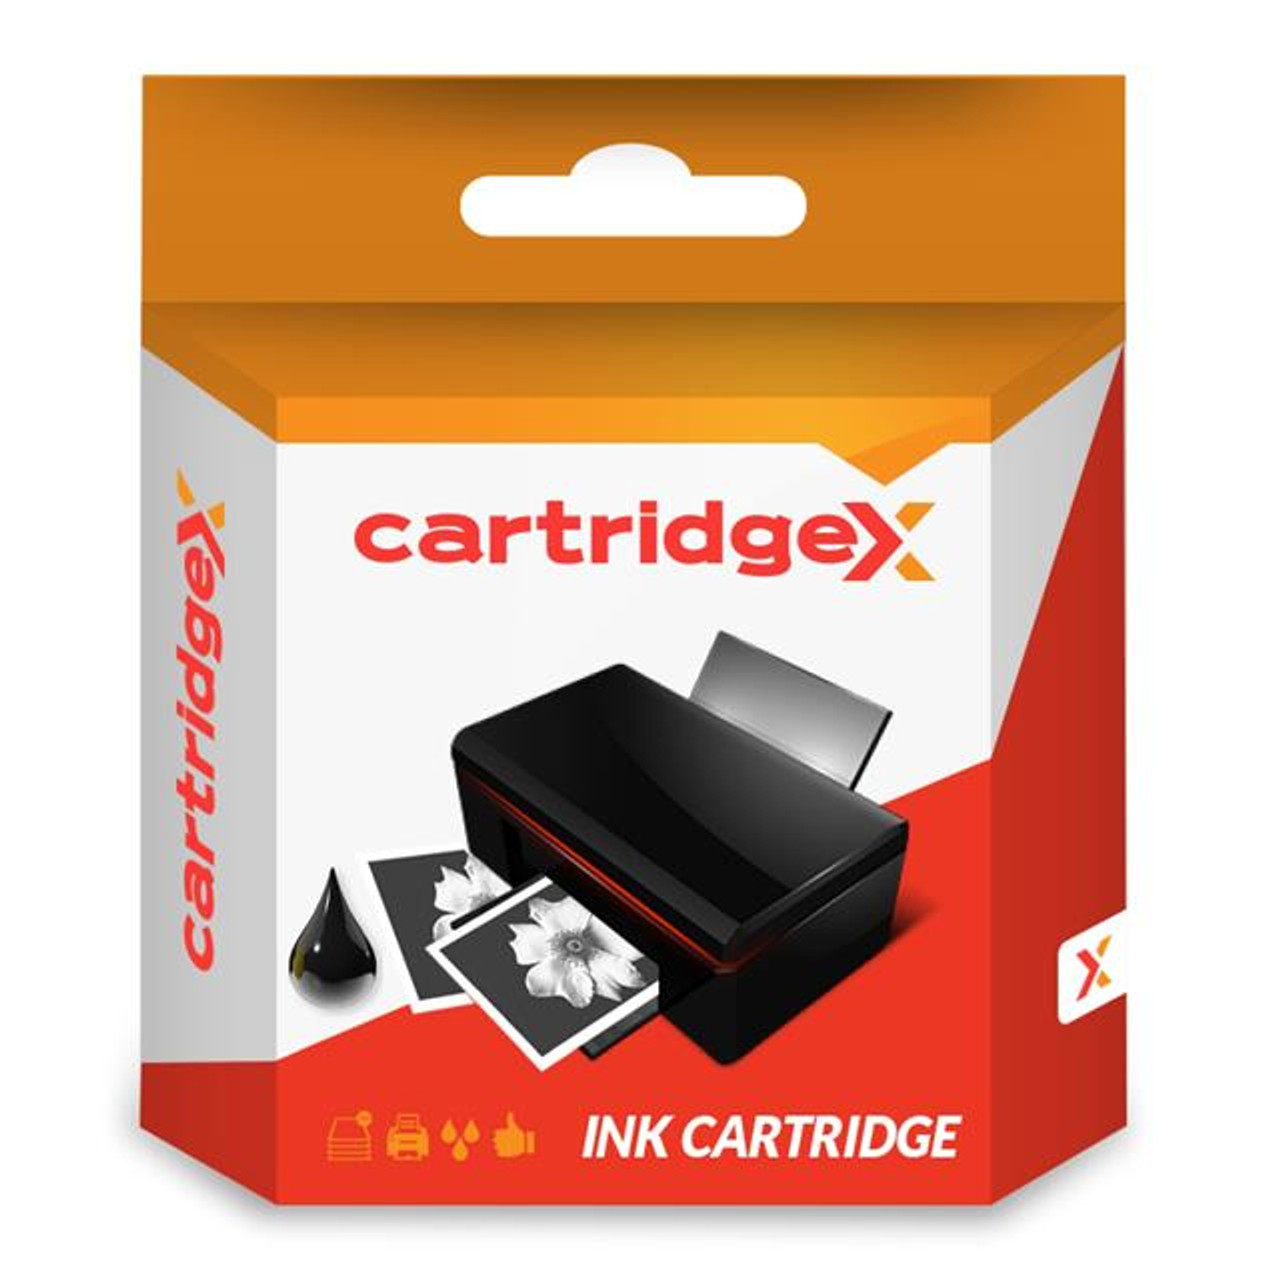 Compatible Black Ink Cartridge For Hp 88xl 88 C9396ae Officejet Pro K5400 L7700 K5400dn